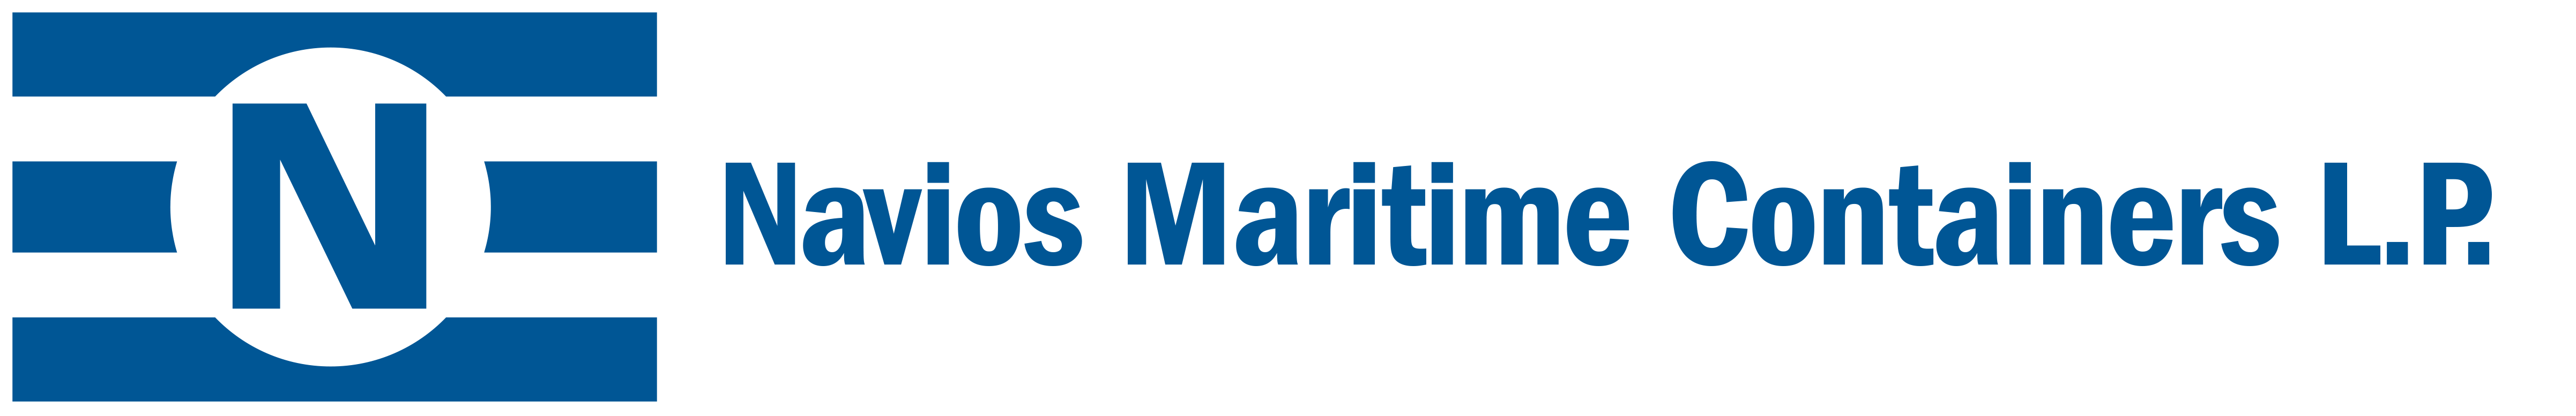 Navios Maritime Container